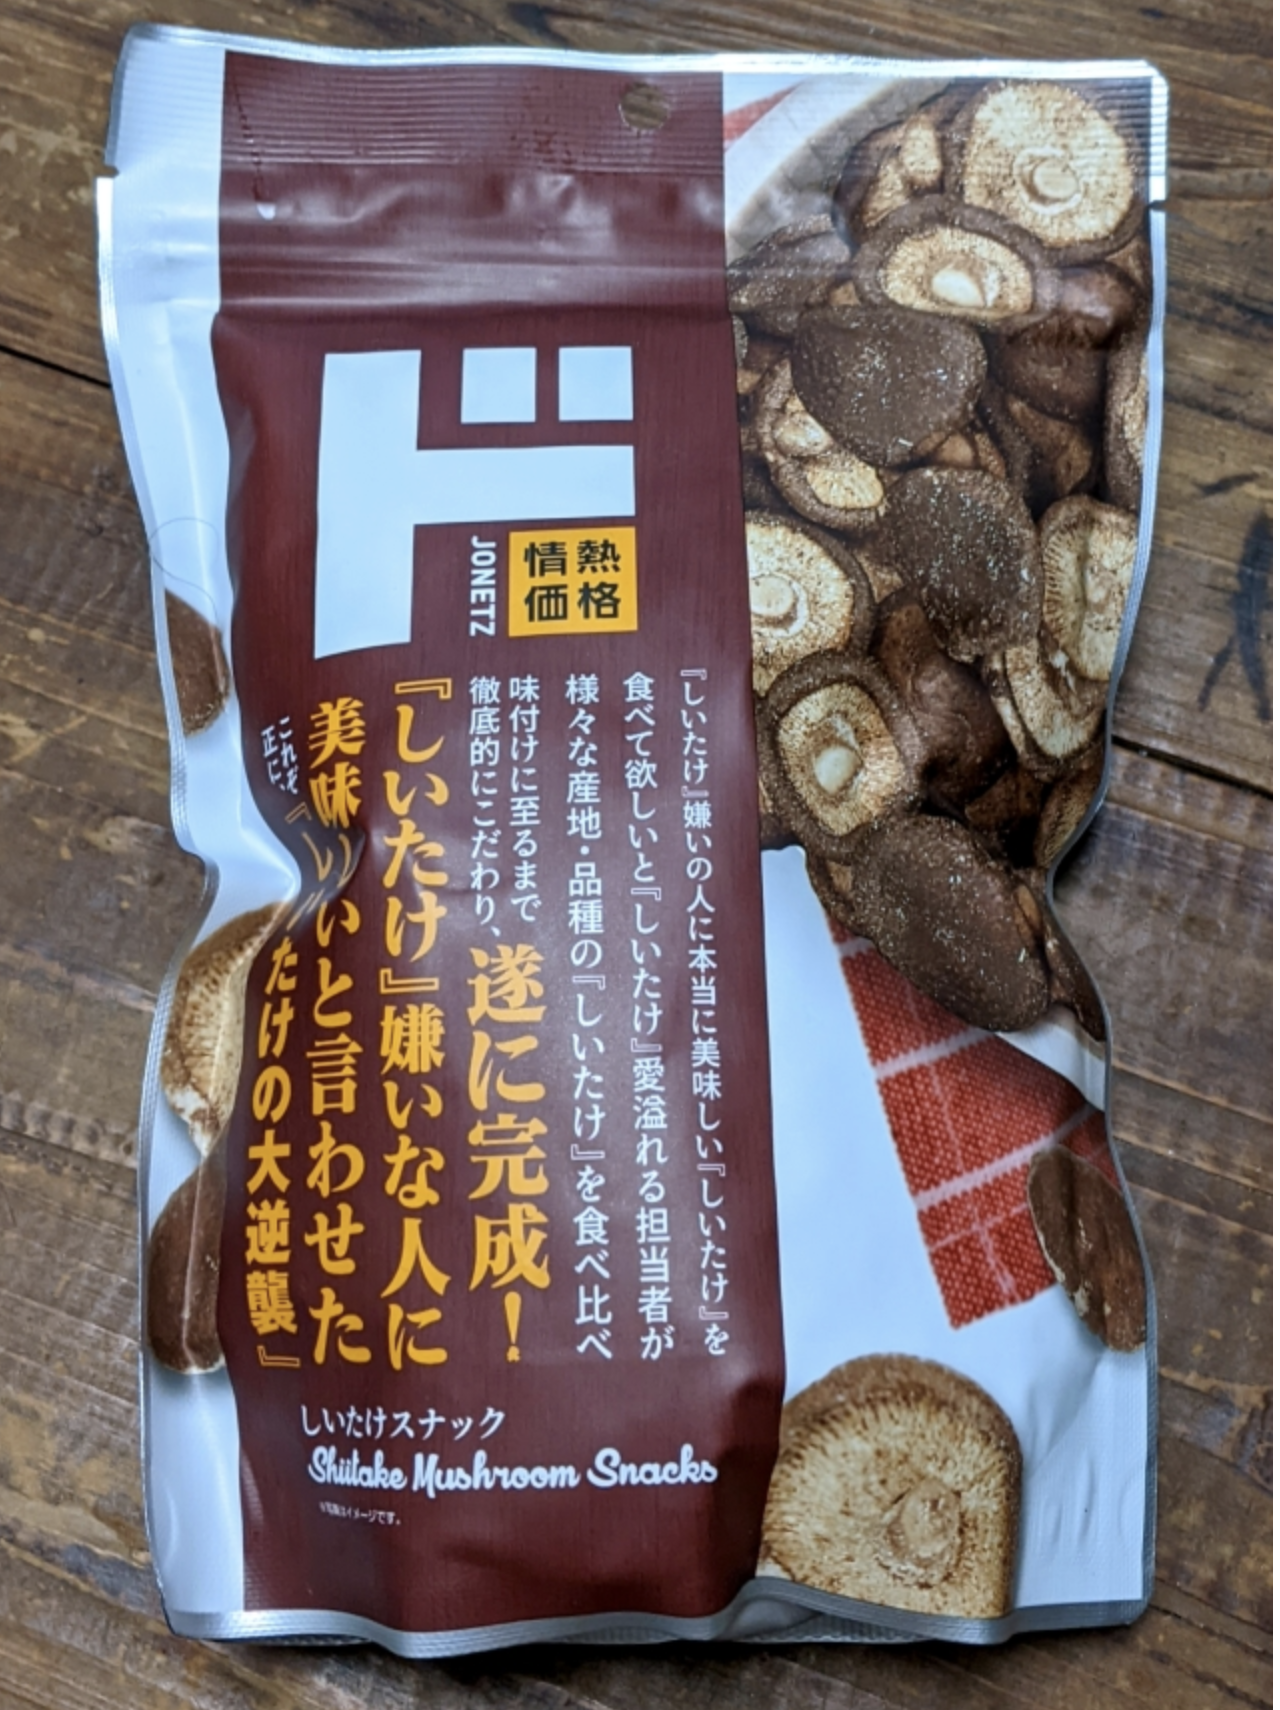 Screen Shot 2022 09 12 at 8.26.38 - Japanese shiitake mushroom snacks from Don Quijote, created for individuals who don’t like mushrooms